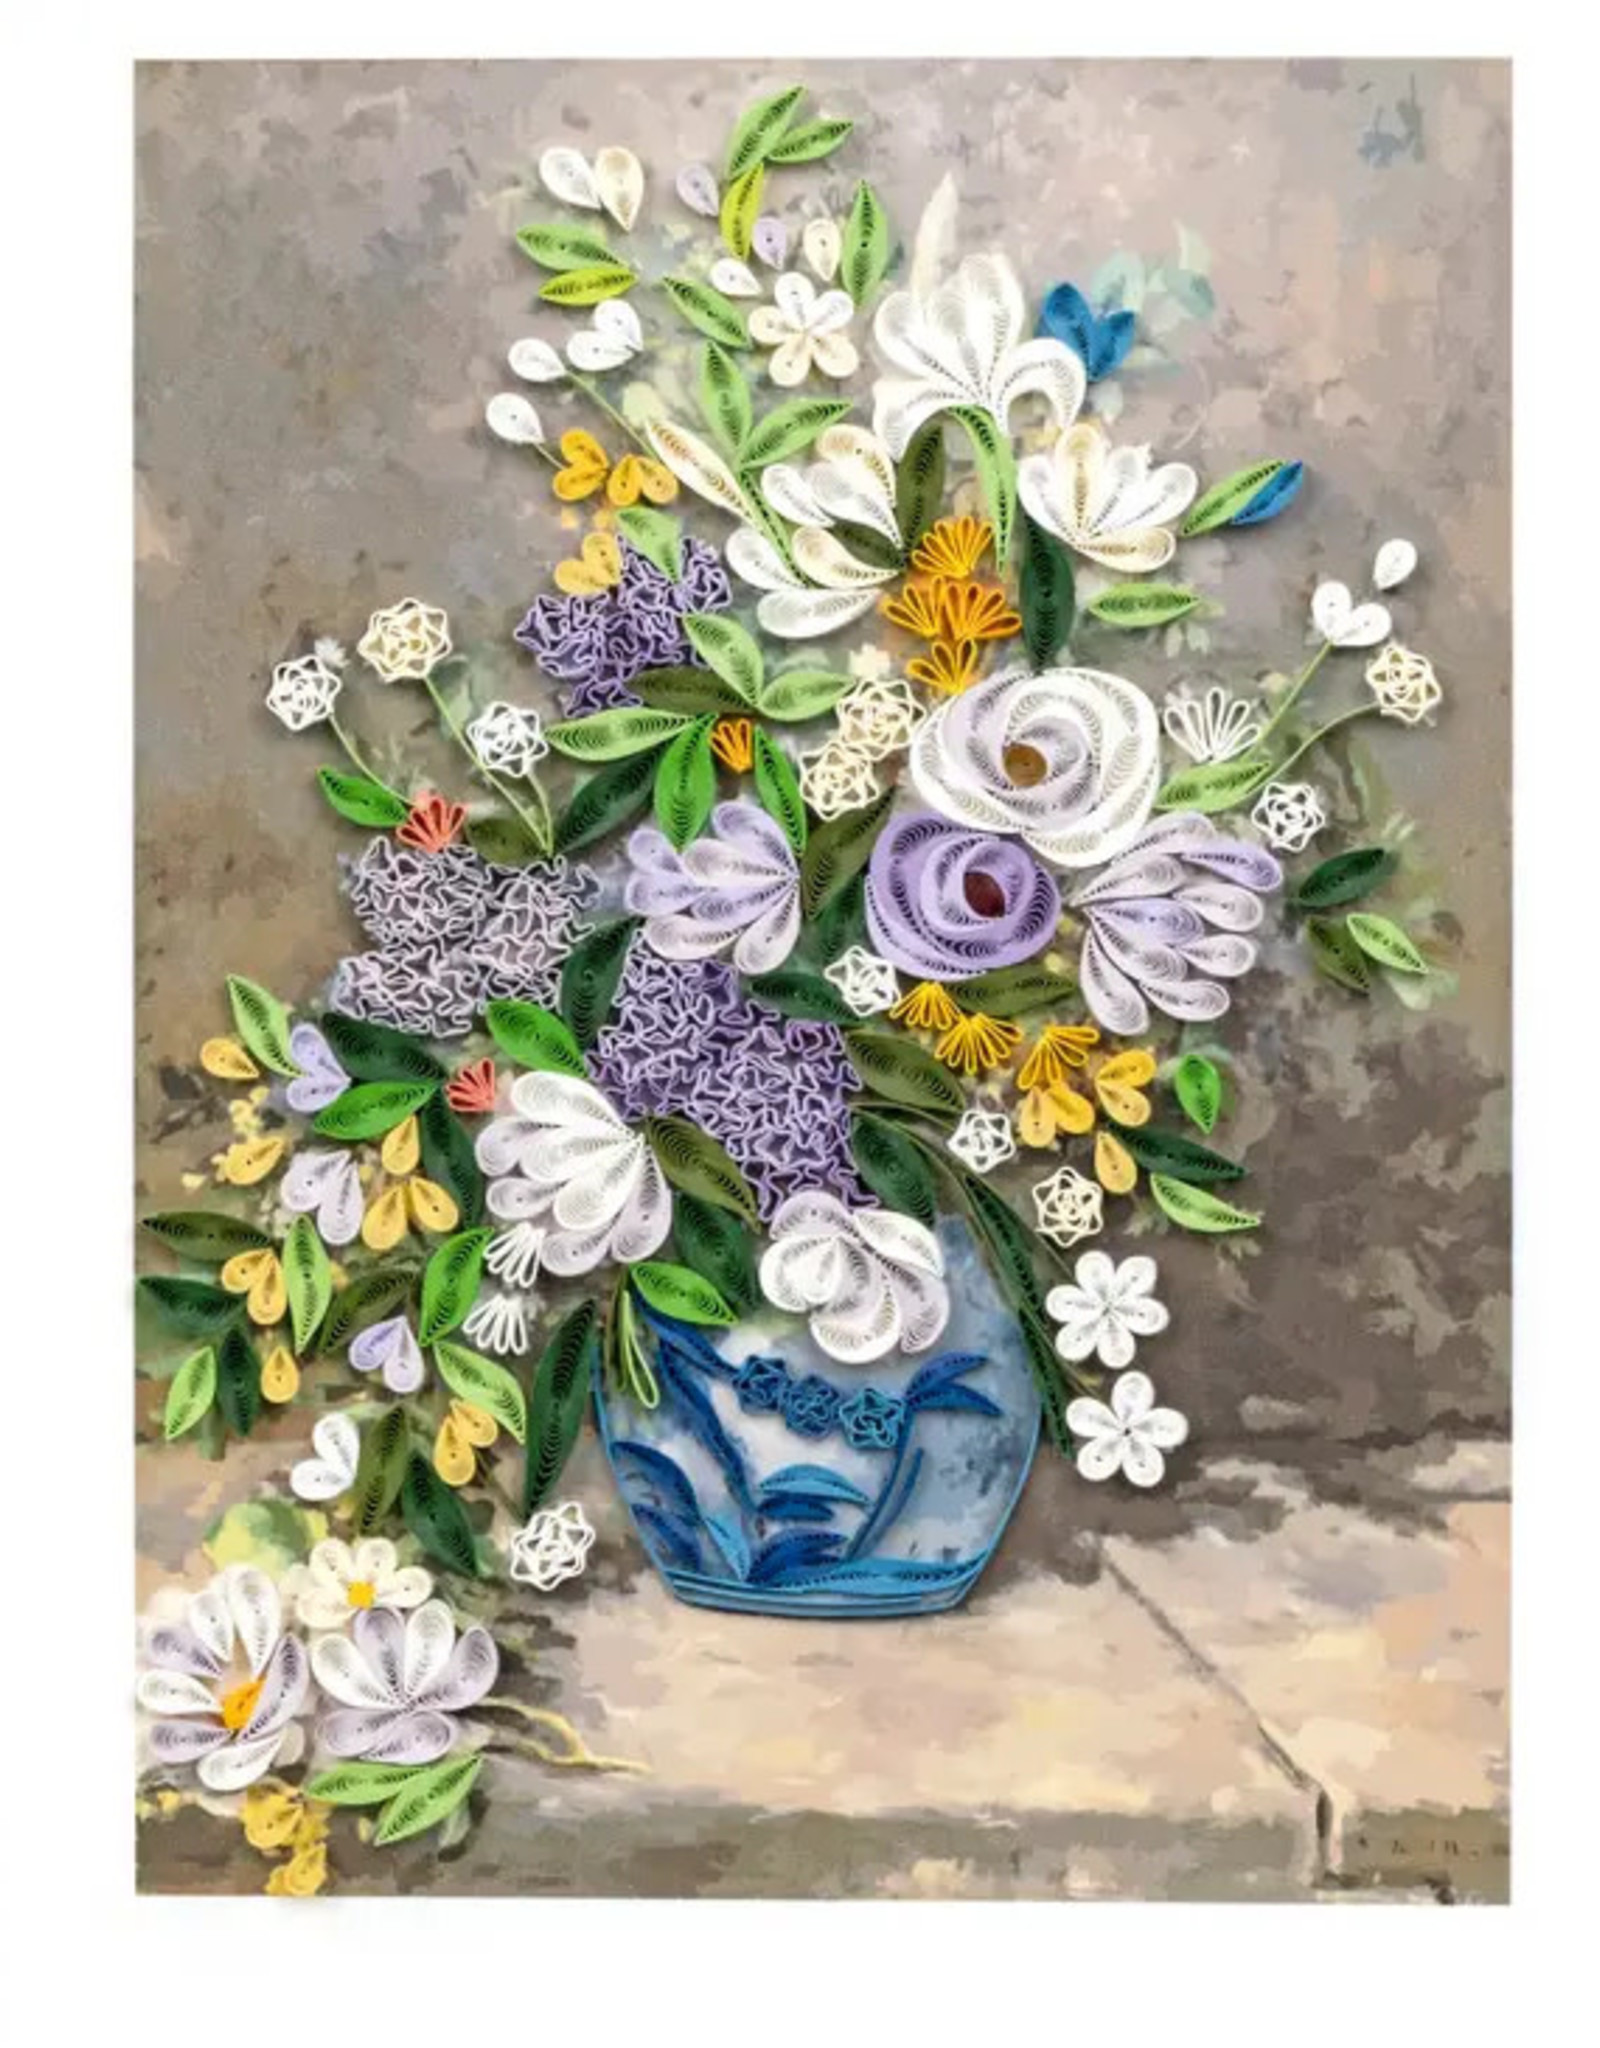 Quilling Card Quilled Spring Bouquet, Renoir - Artist Series